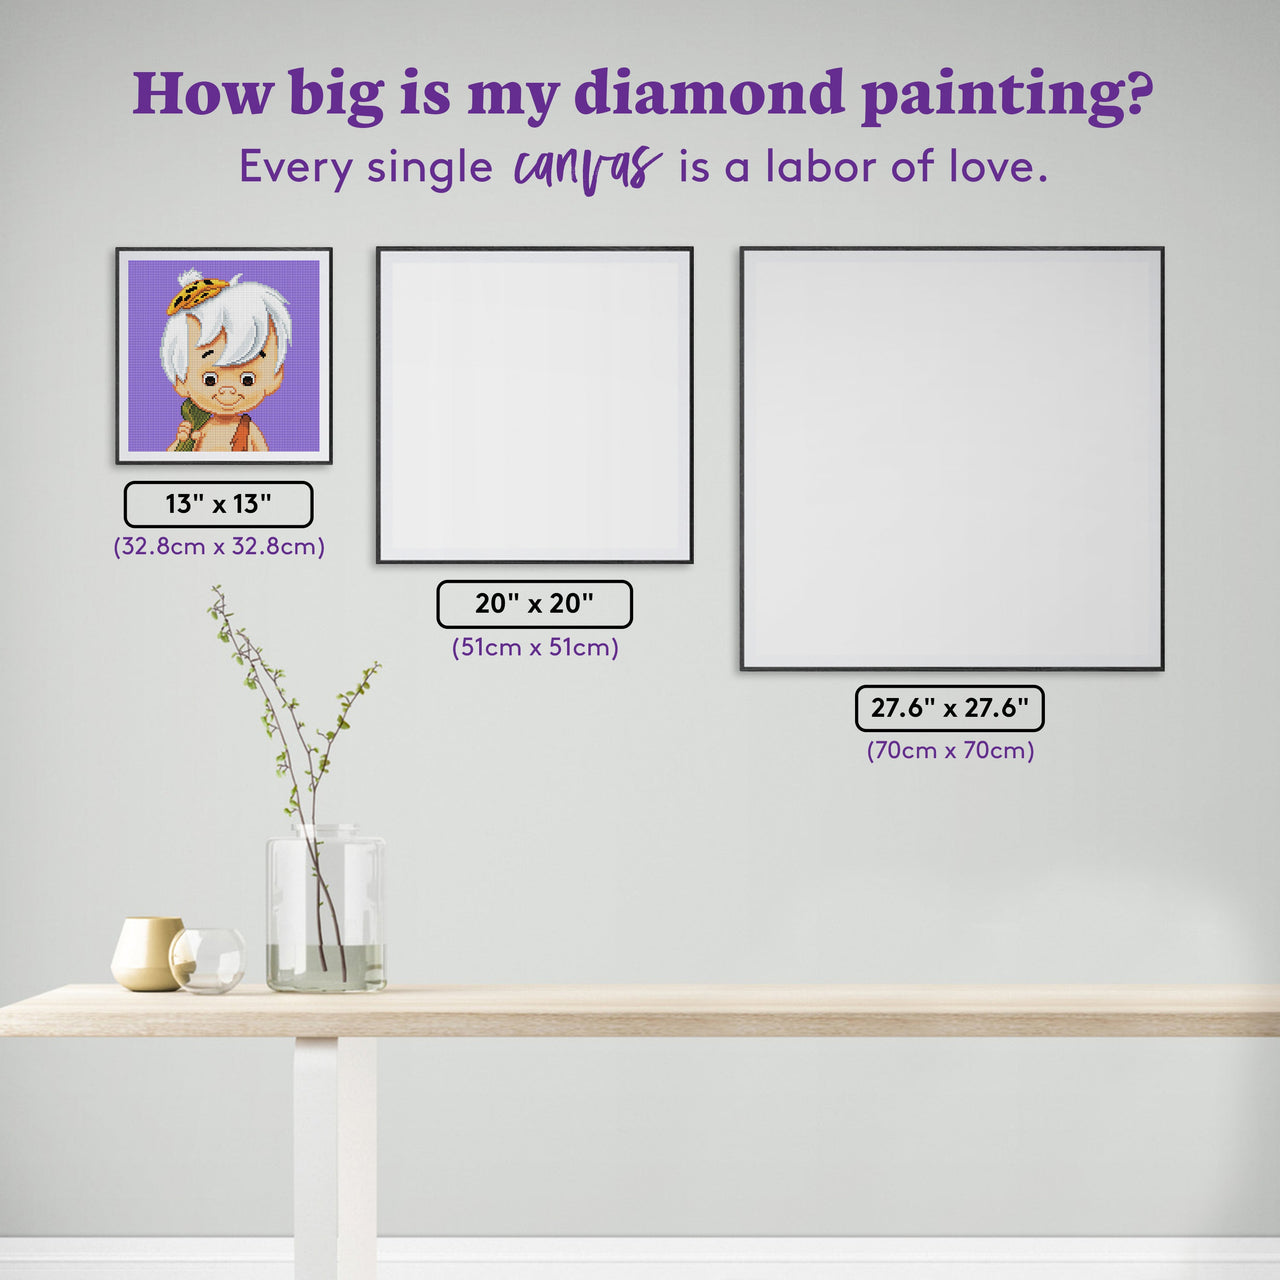 Diamond Painting Bamm-Bamm Rubble 13" x 13" (32.8cm x 32.8cm) / Round With 26 Colors including 2 Fairy Dust Diamonds / 13,689